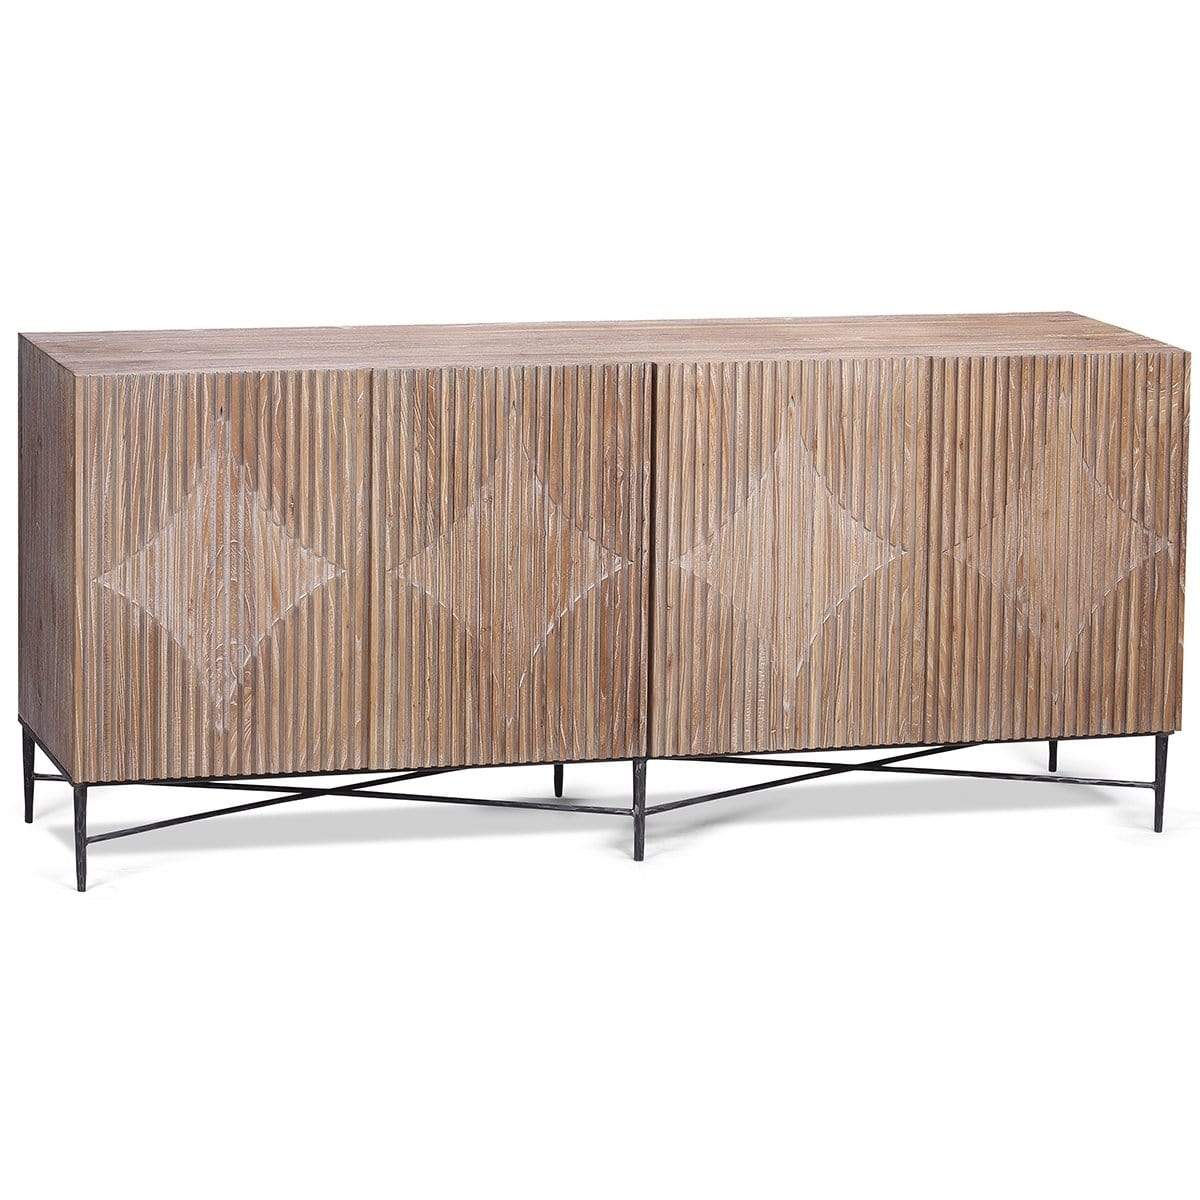 Dovetail Zell Sideboard Furniture dovetail-DOV18504